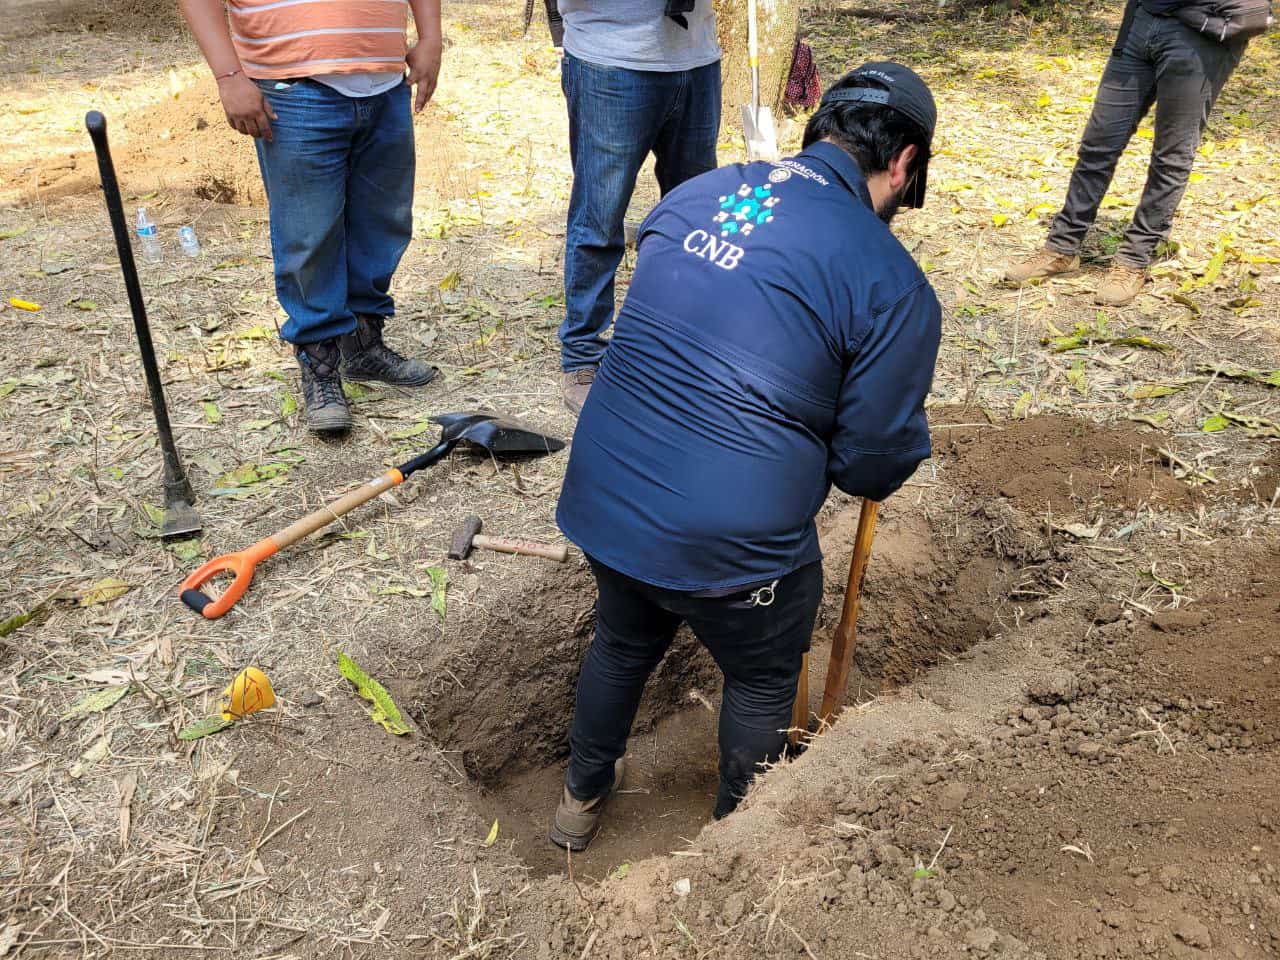 A CNB team search for bodies in Veracruz state